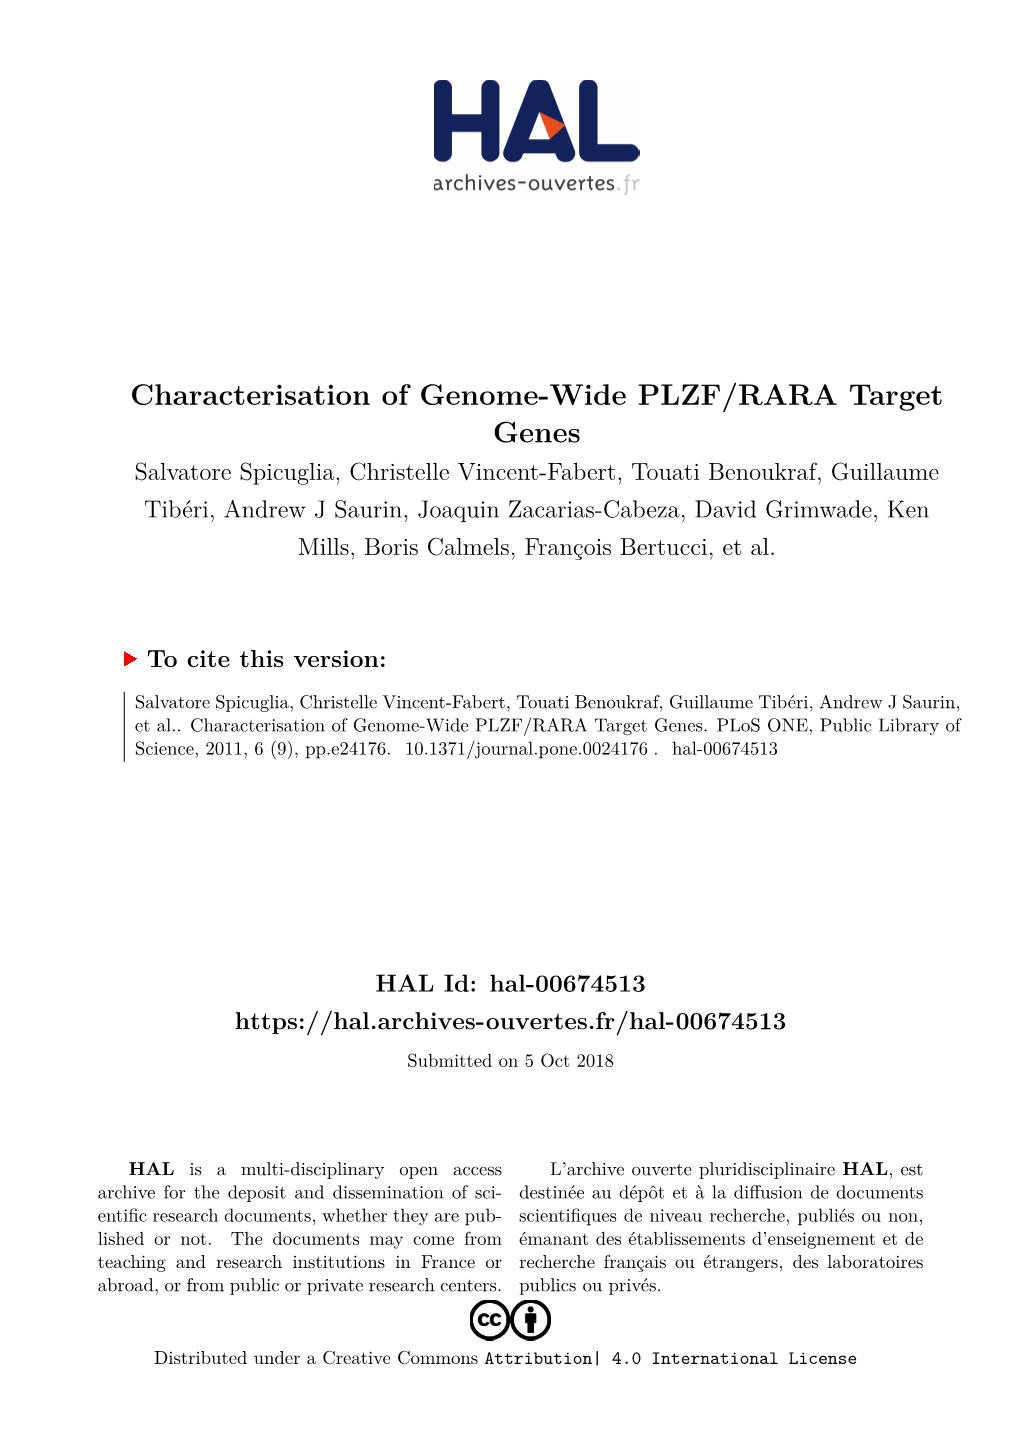 Characterisation of Genome-Wide PLZF/RARA